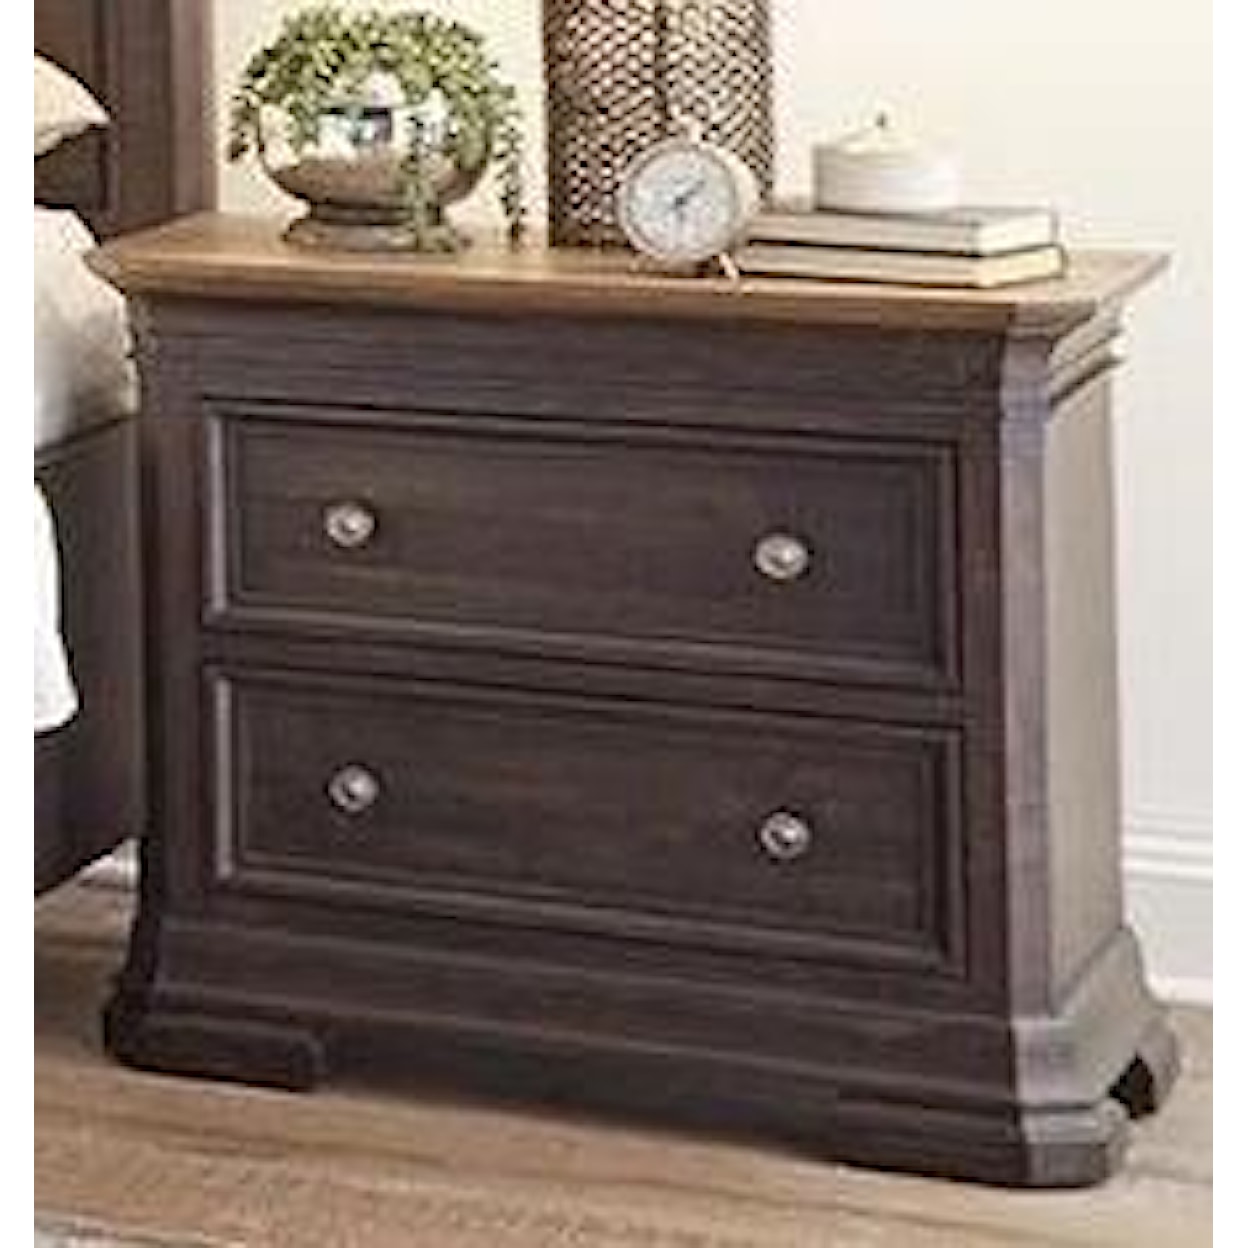 Virginia Furniture Market Solid Wood Brossard Collection Nightstand